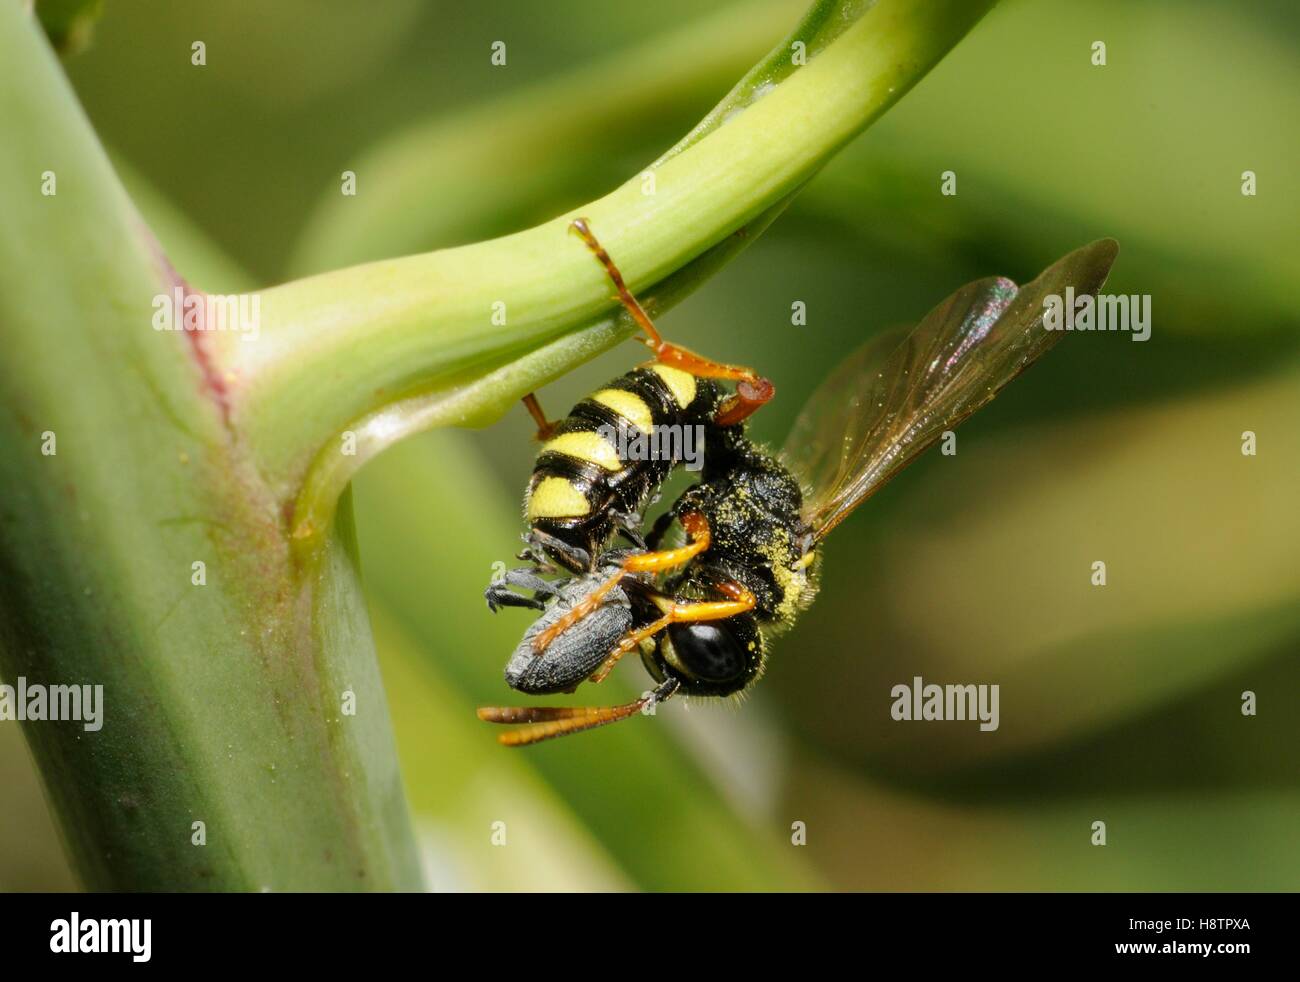 Digger wasp(Cerceris arenaria) capturing a Weevil, Northern Vosges Regional Nature Park, France Stock Photo